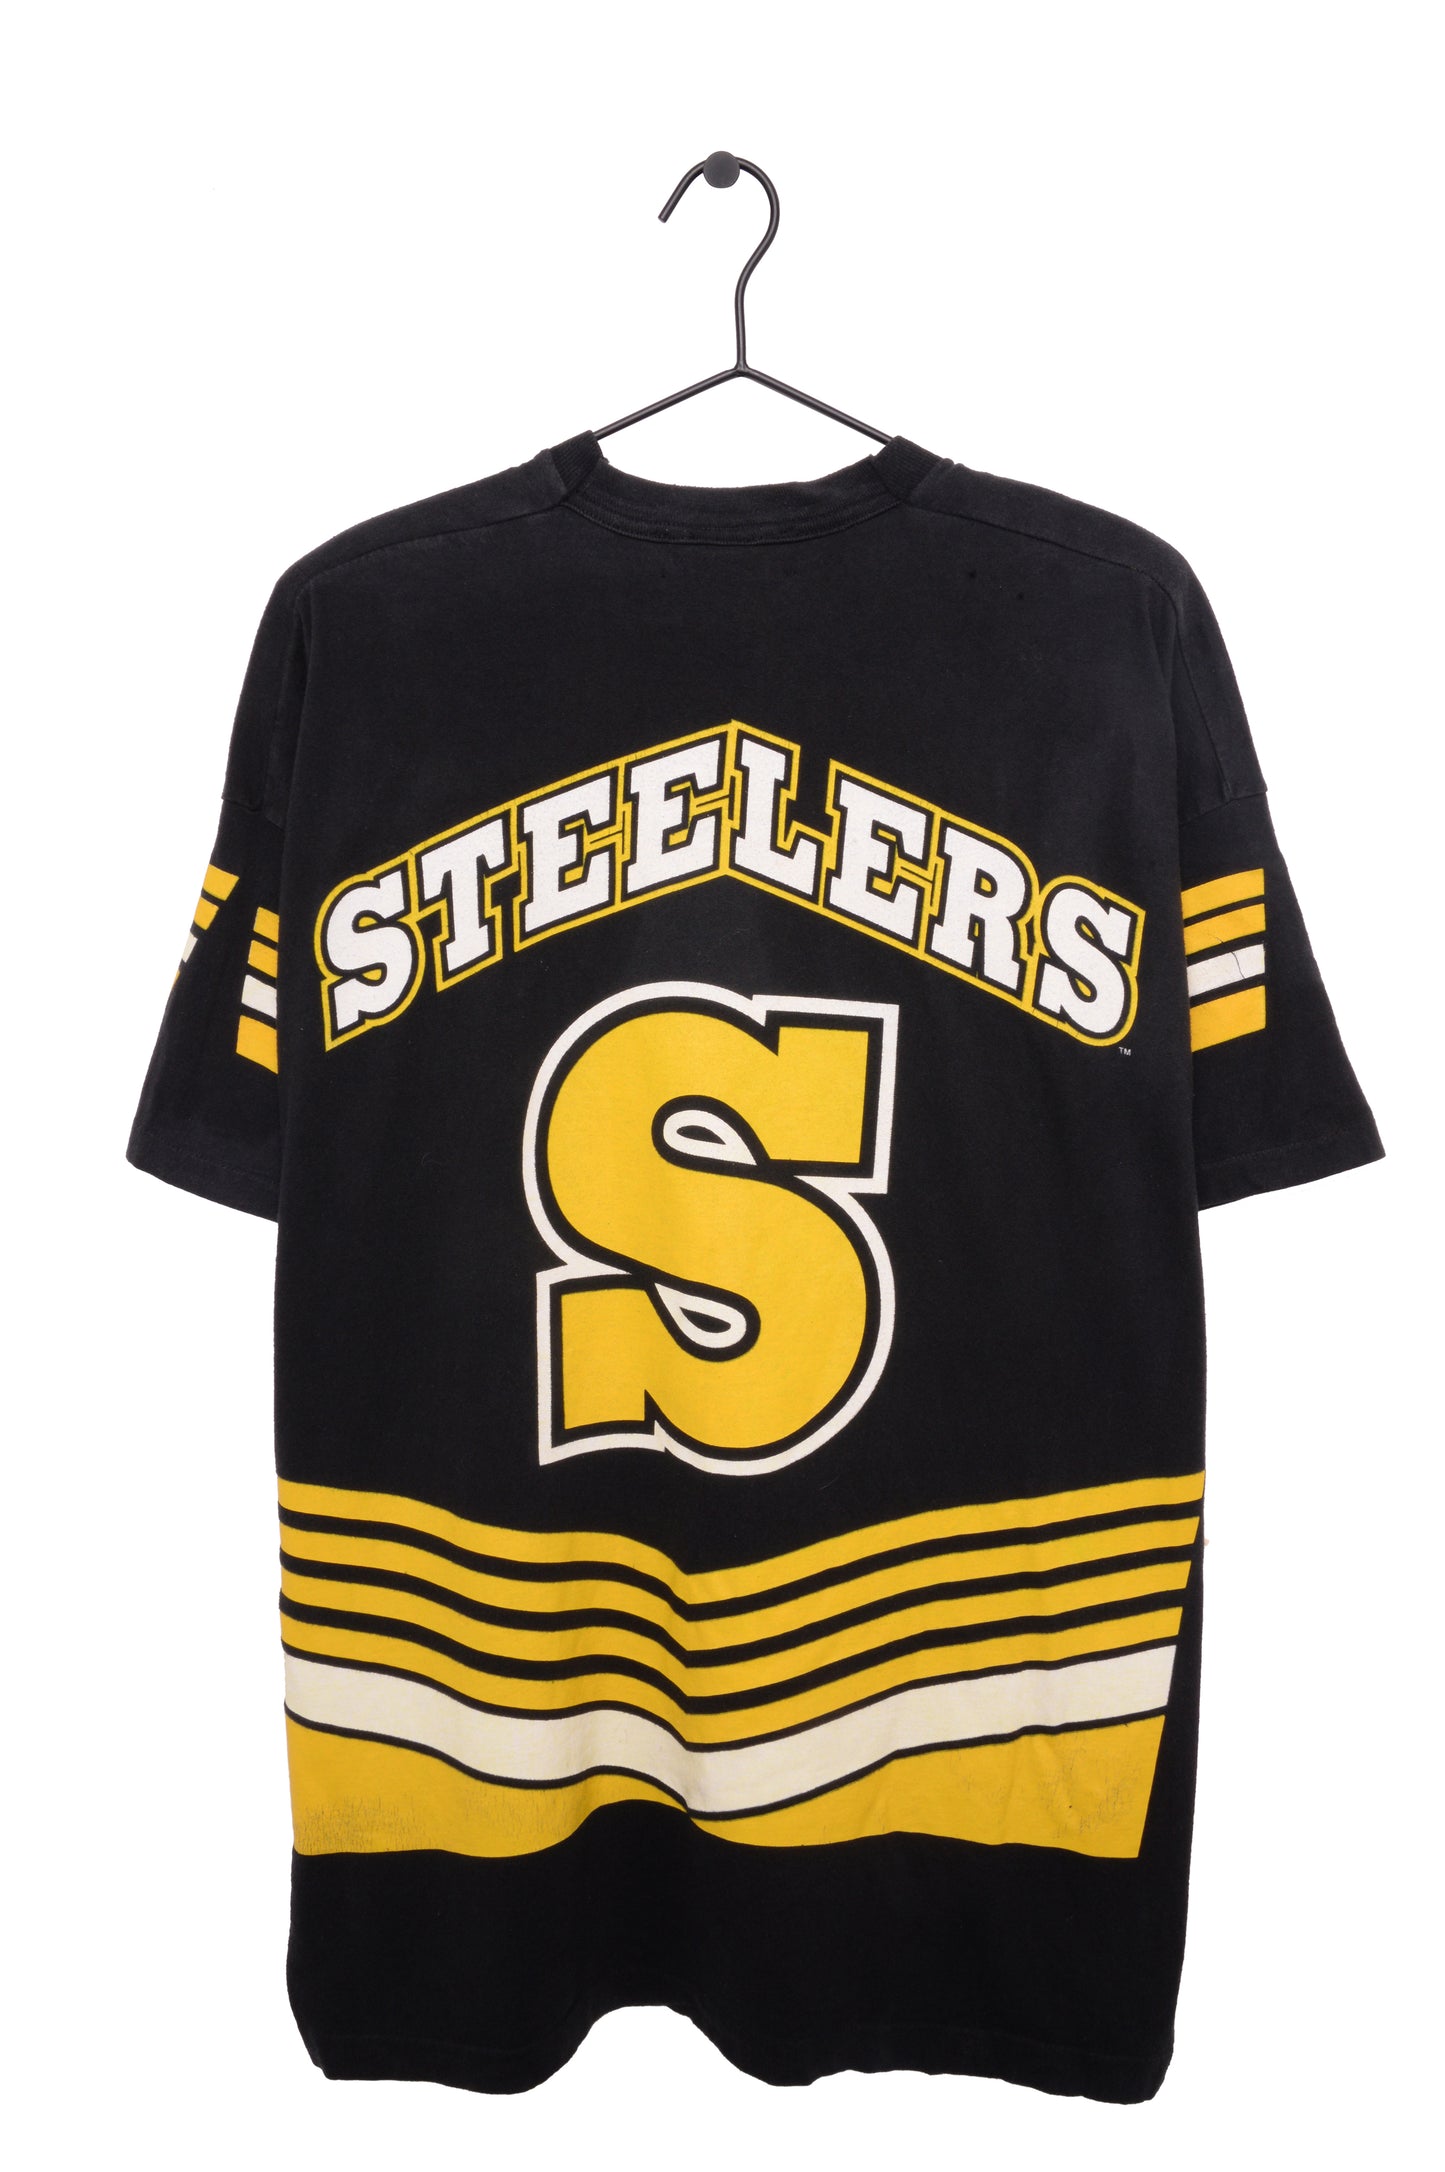 1995 Pittsburgh Steelers USA Tee